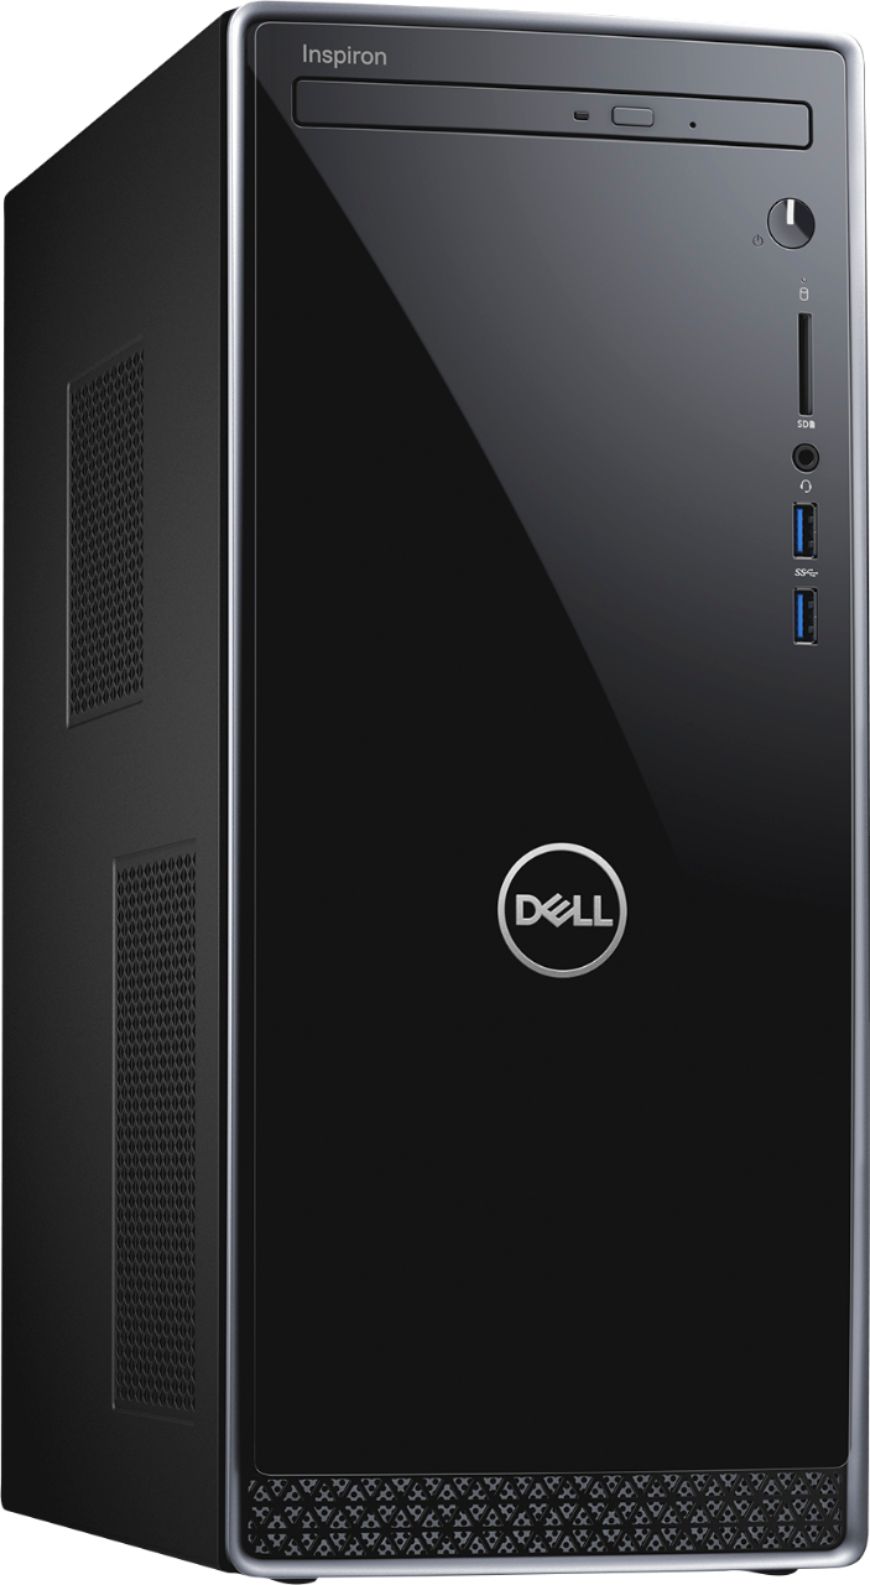 Dell - Inspiron Desktop - Intel Core i3 - 8GB Memory - 256GB HDD - Black With Silver Trim